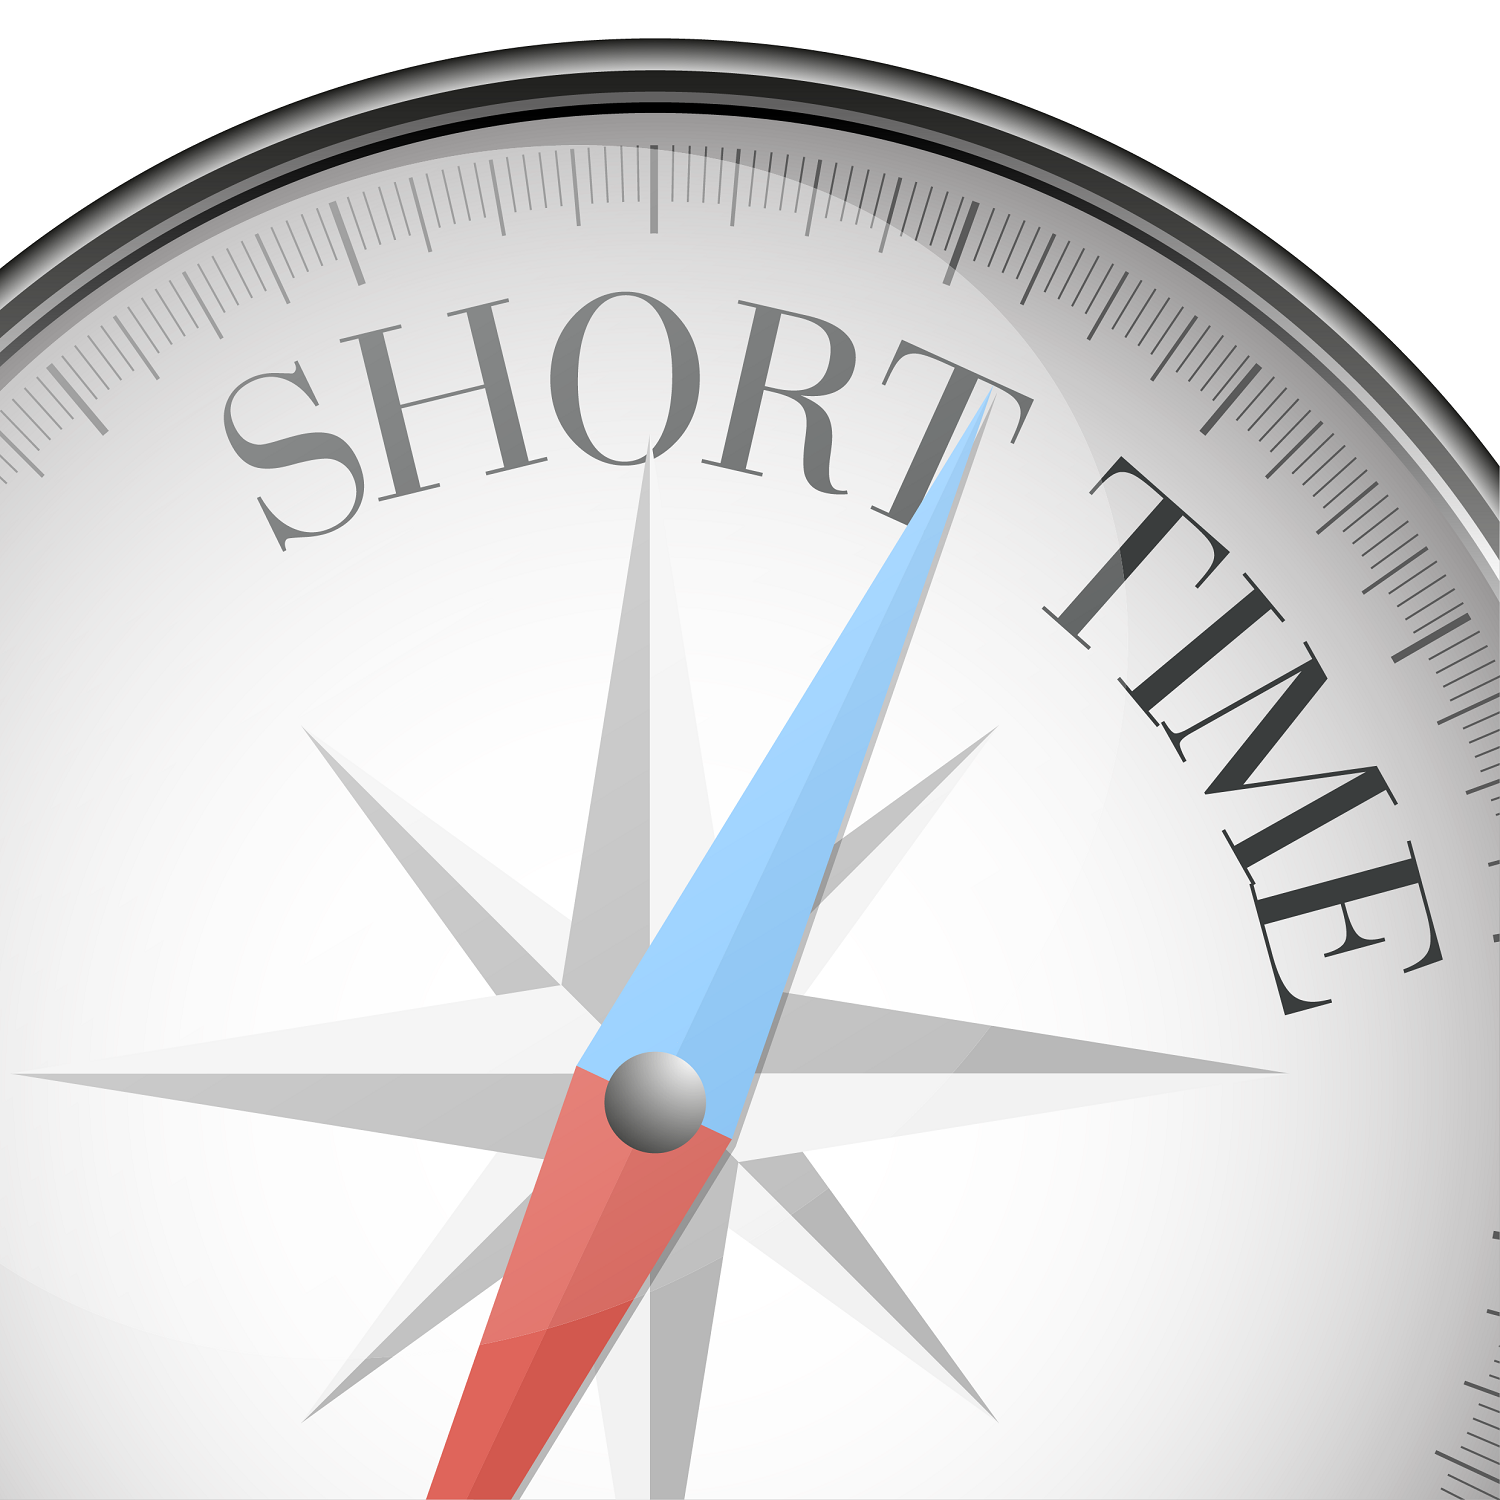 EU-27 support for national short-time work schemes